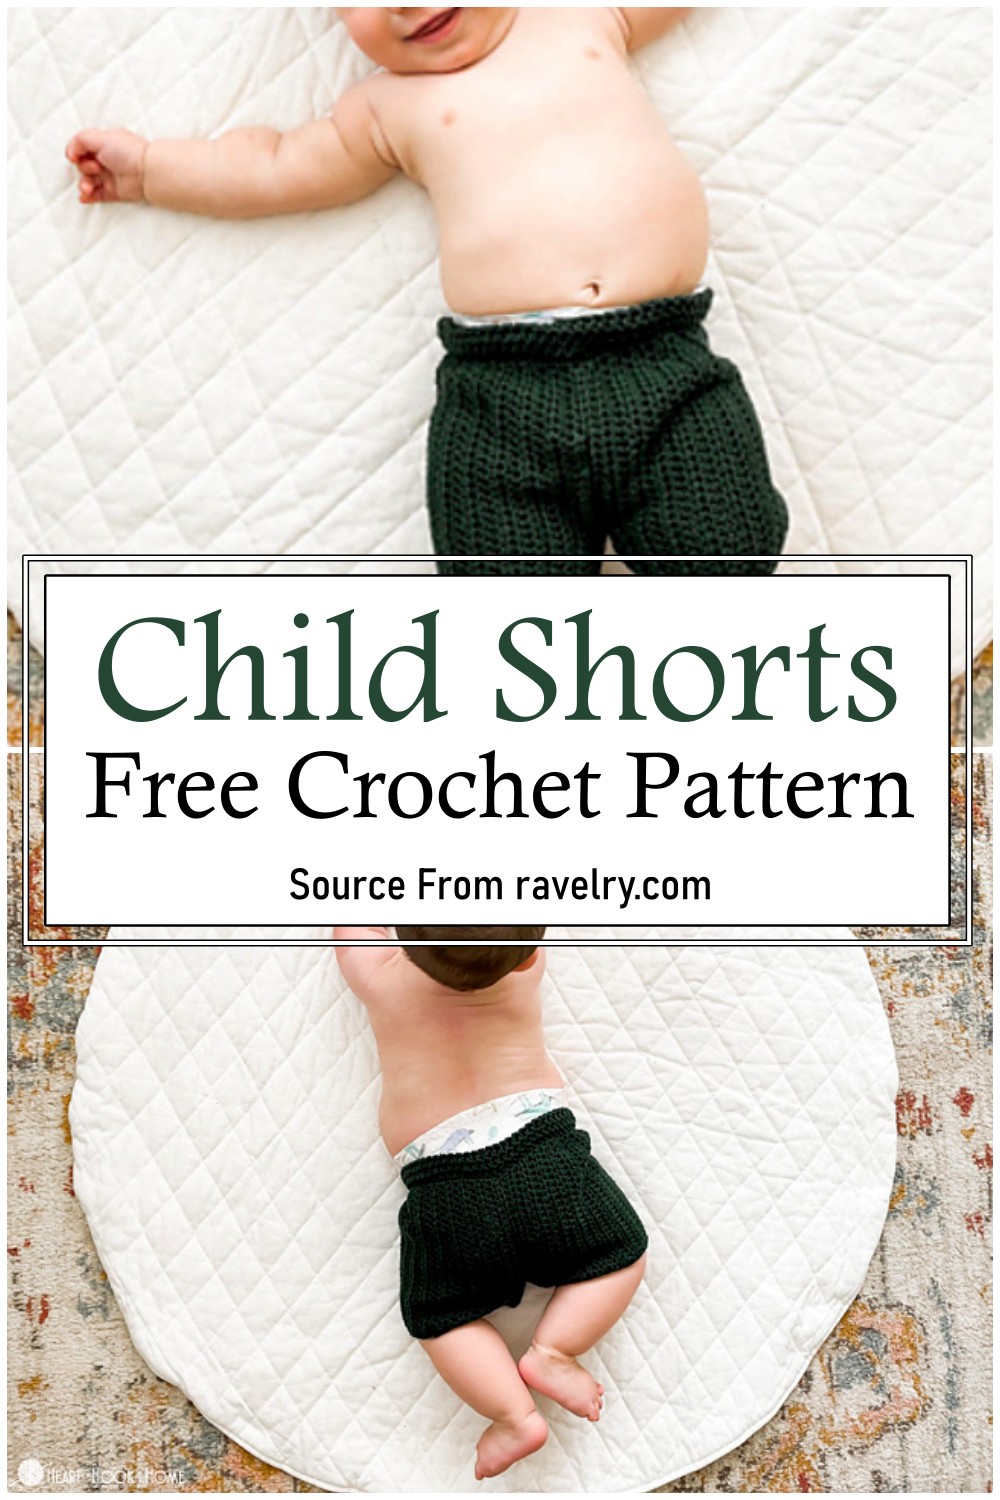 Child Shorts